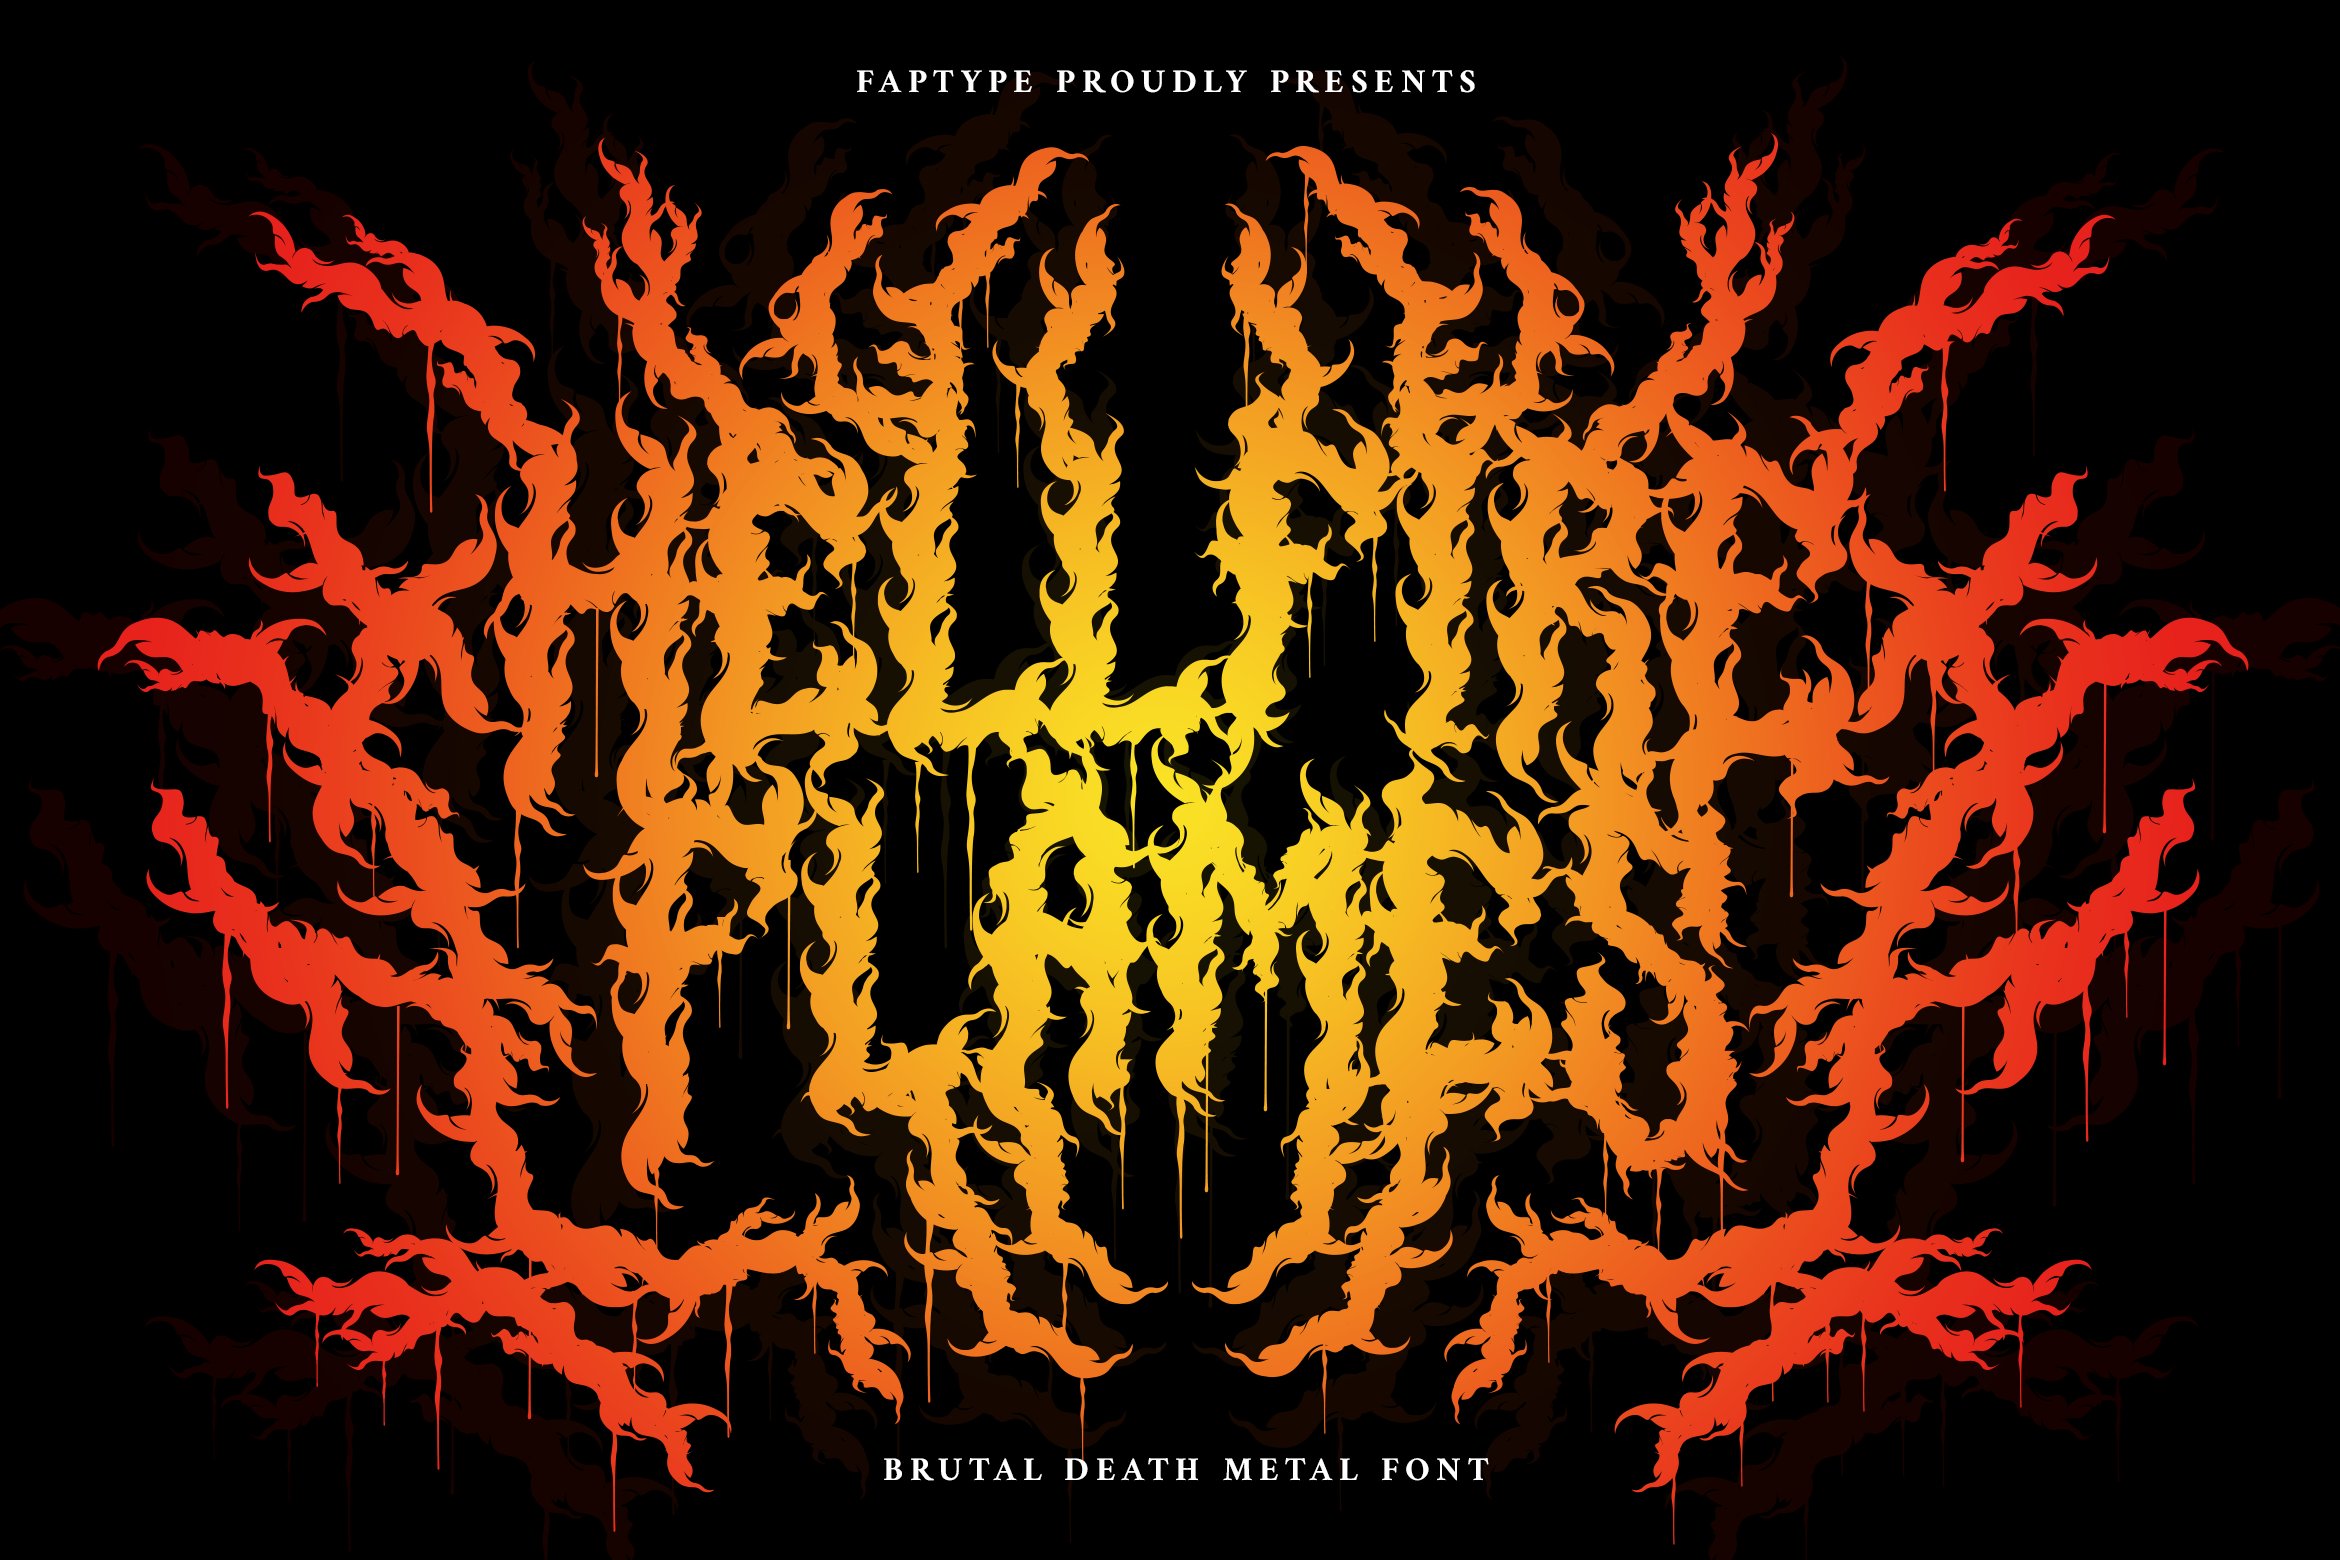 Hellfire Flames | Death Metal Font cover image.